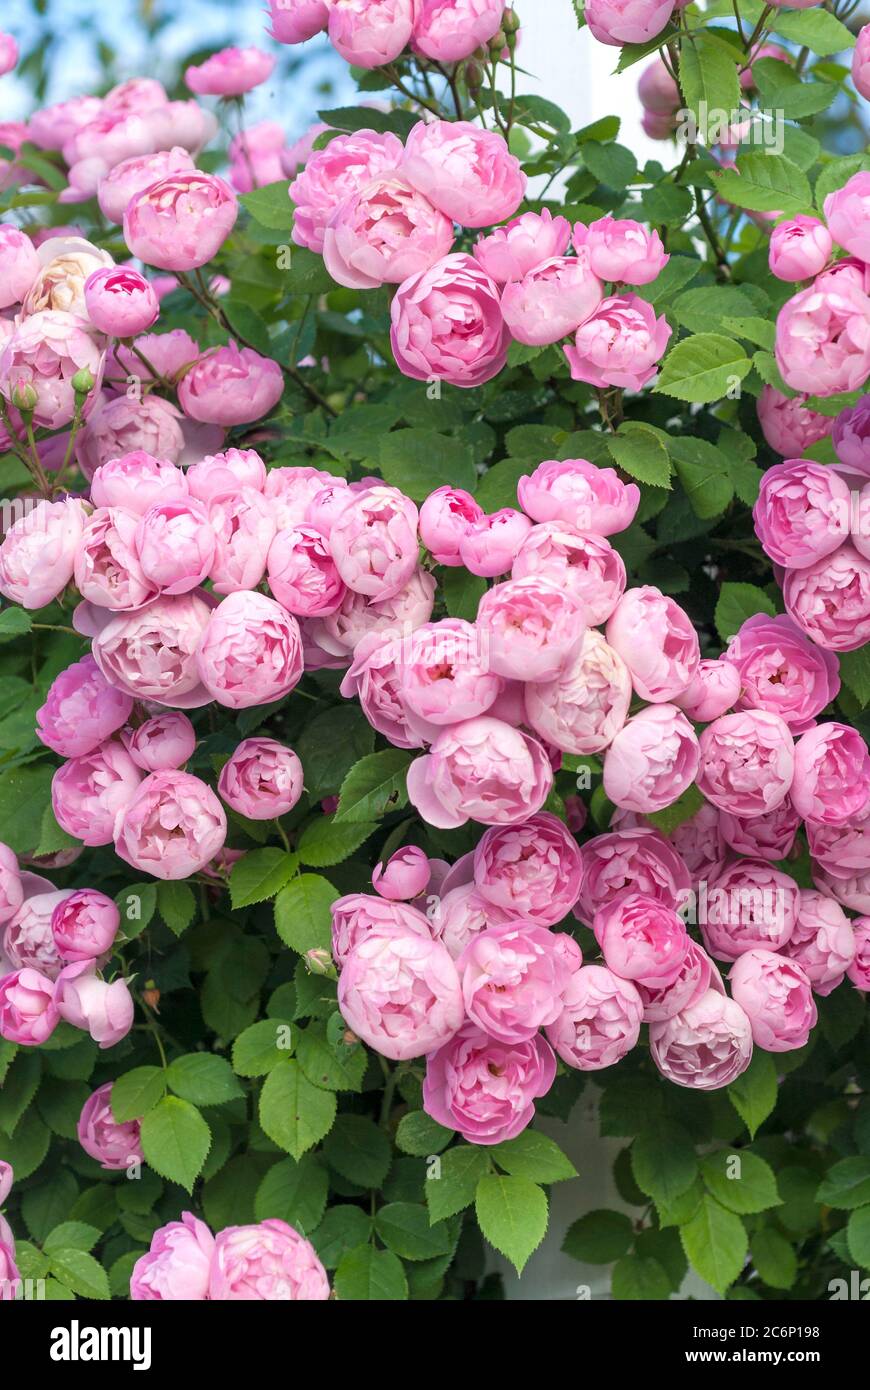 Rambler-Rose Rosa Raubritter, Rambler Rose Pink Raubritter Stock Photo -  Alamy